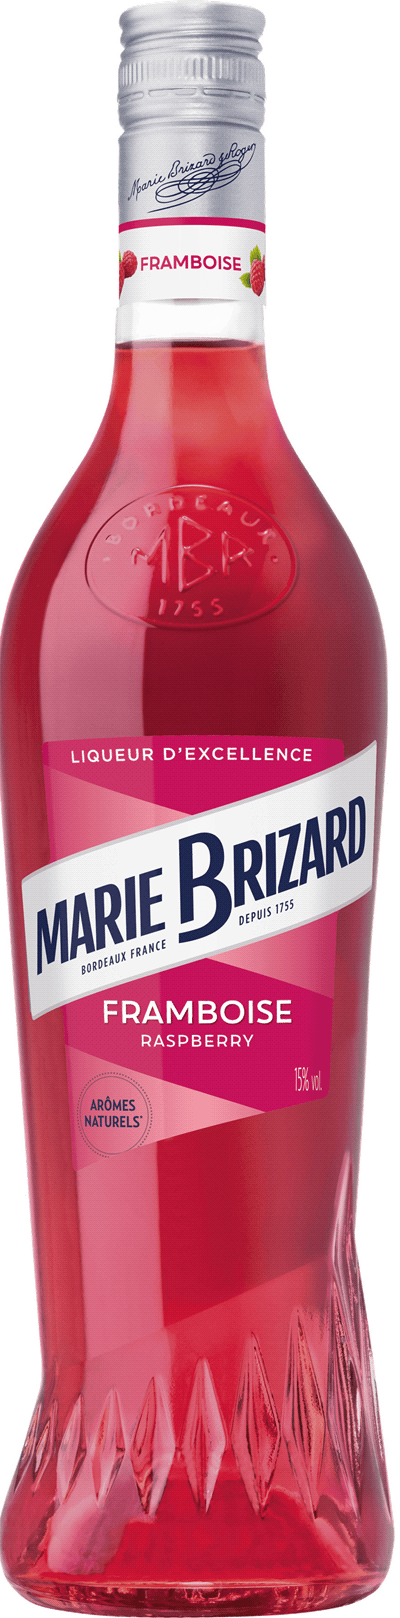 Marie Brizard d'Exellence Raspberry